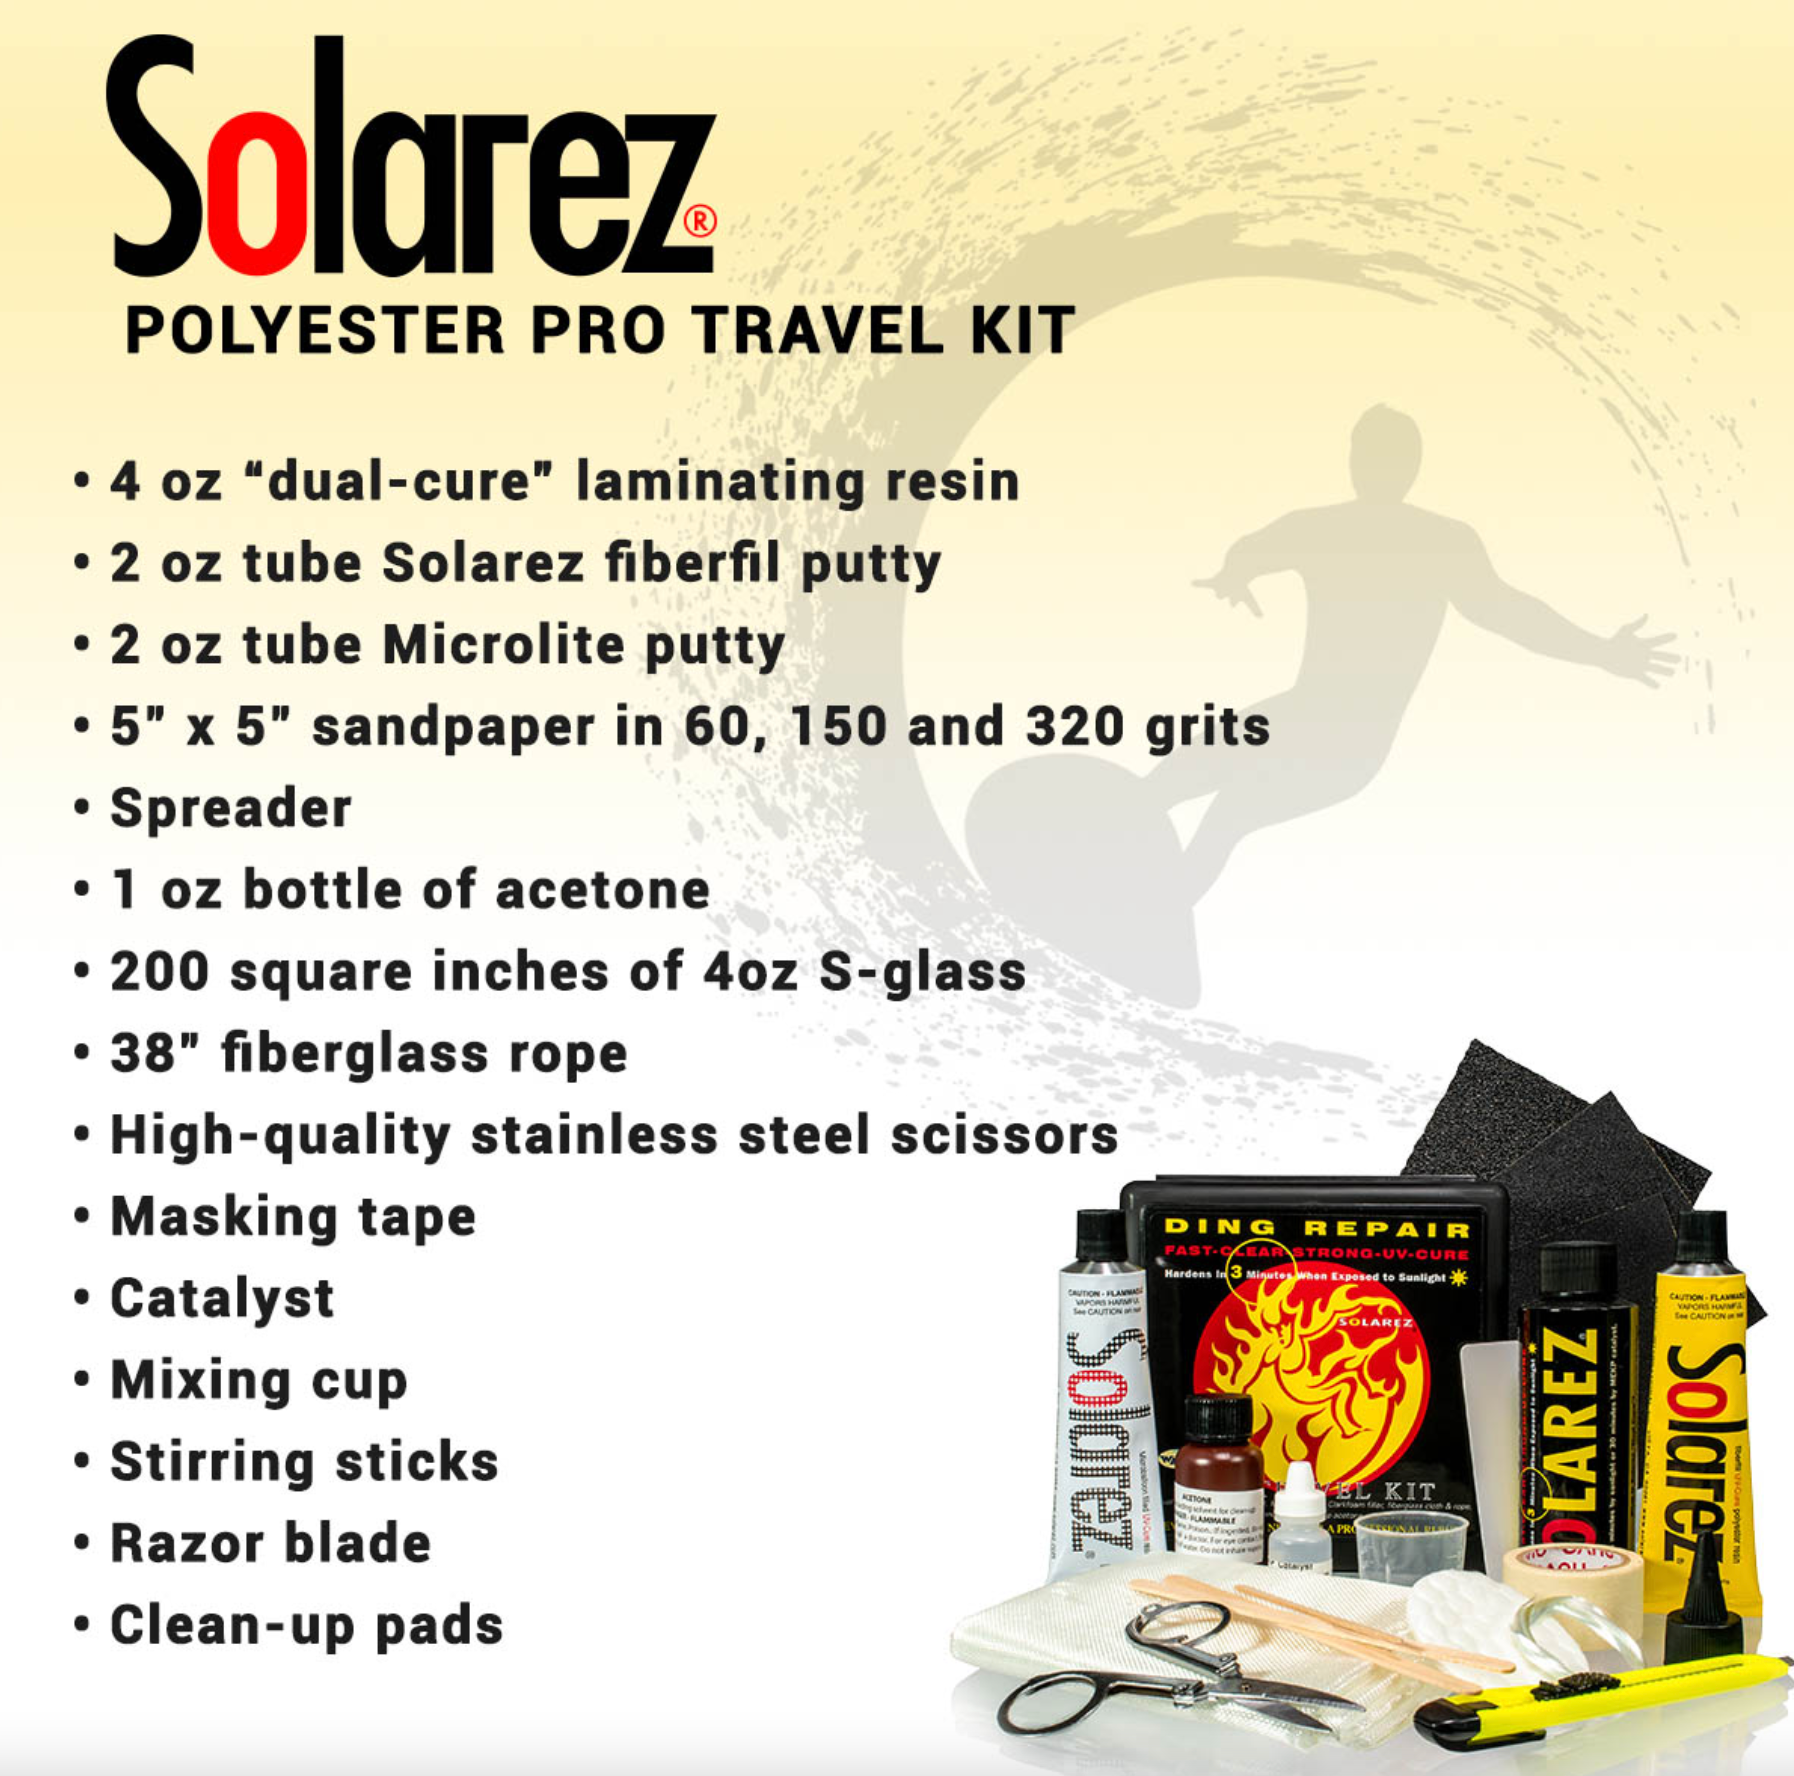 DING REPAIR SOLAREZ Polyester Pro Travel Kit